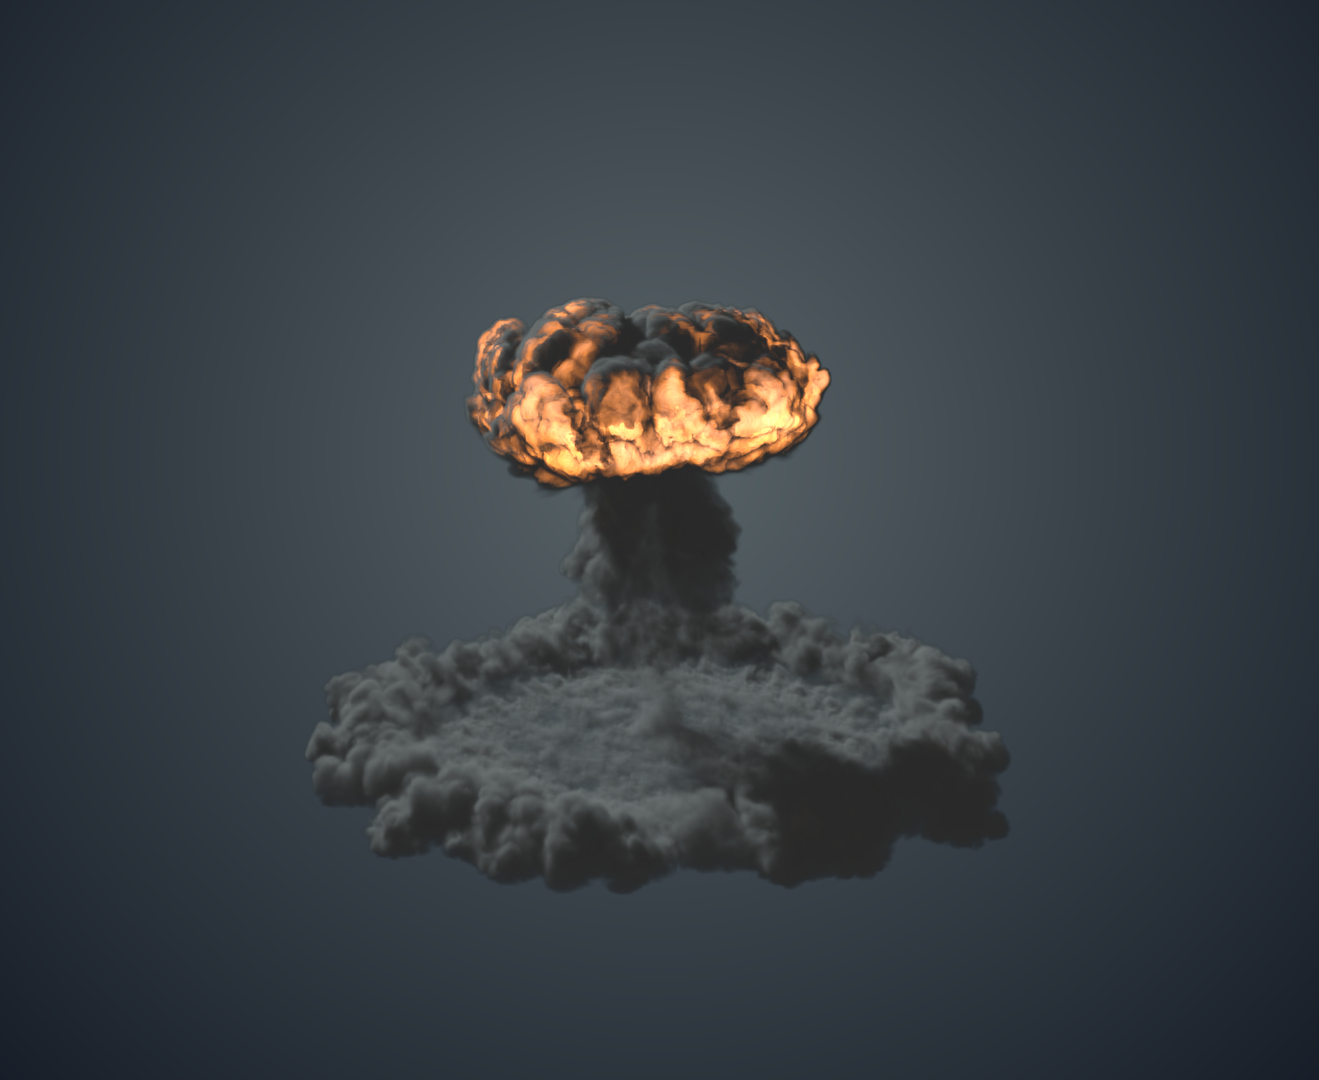 nuke explosion png